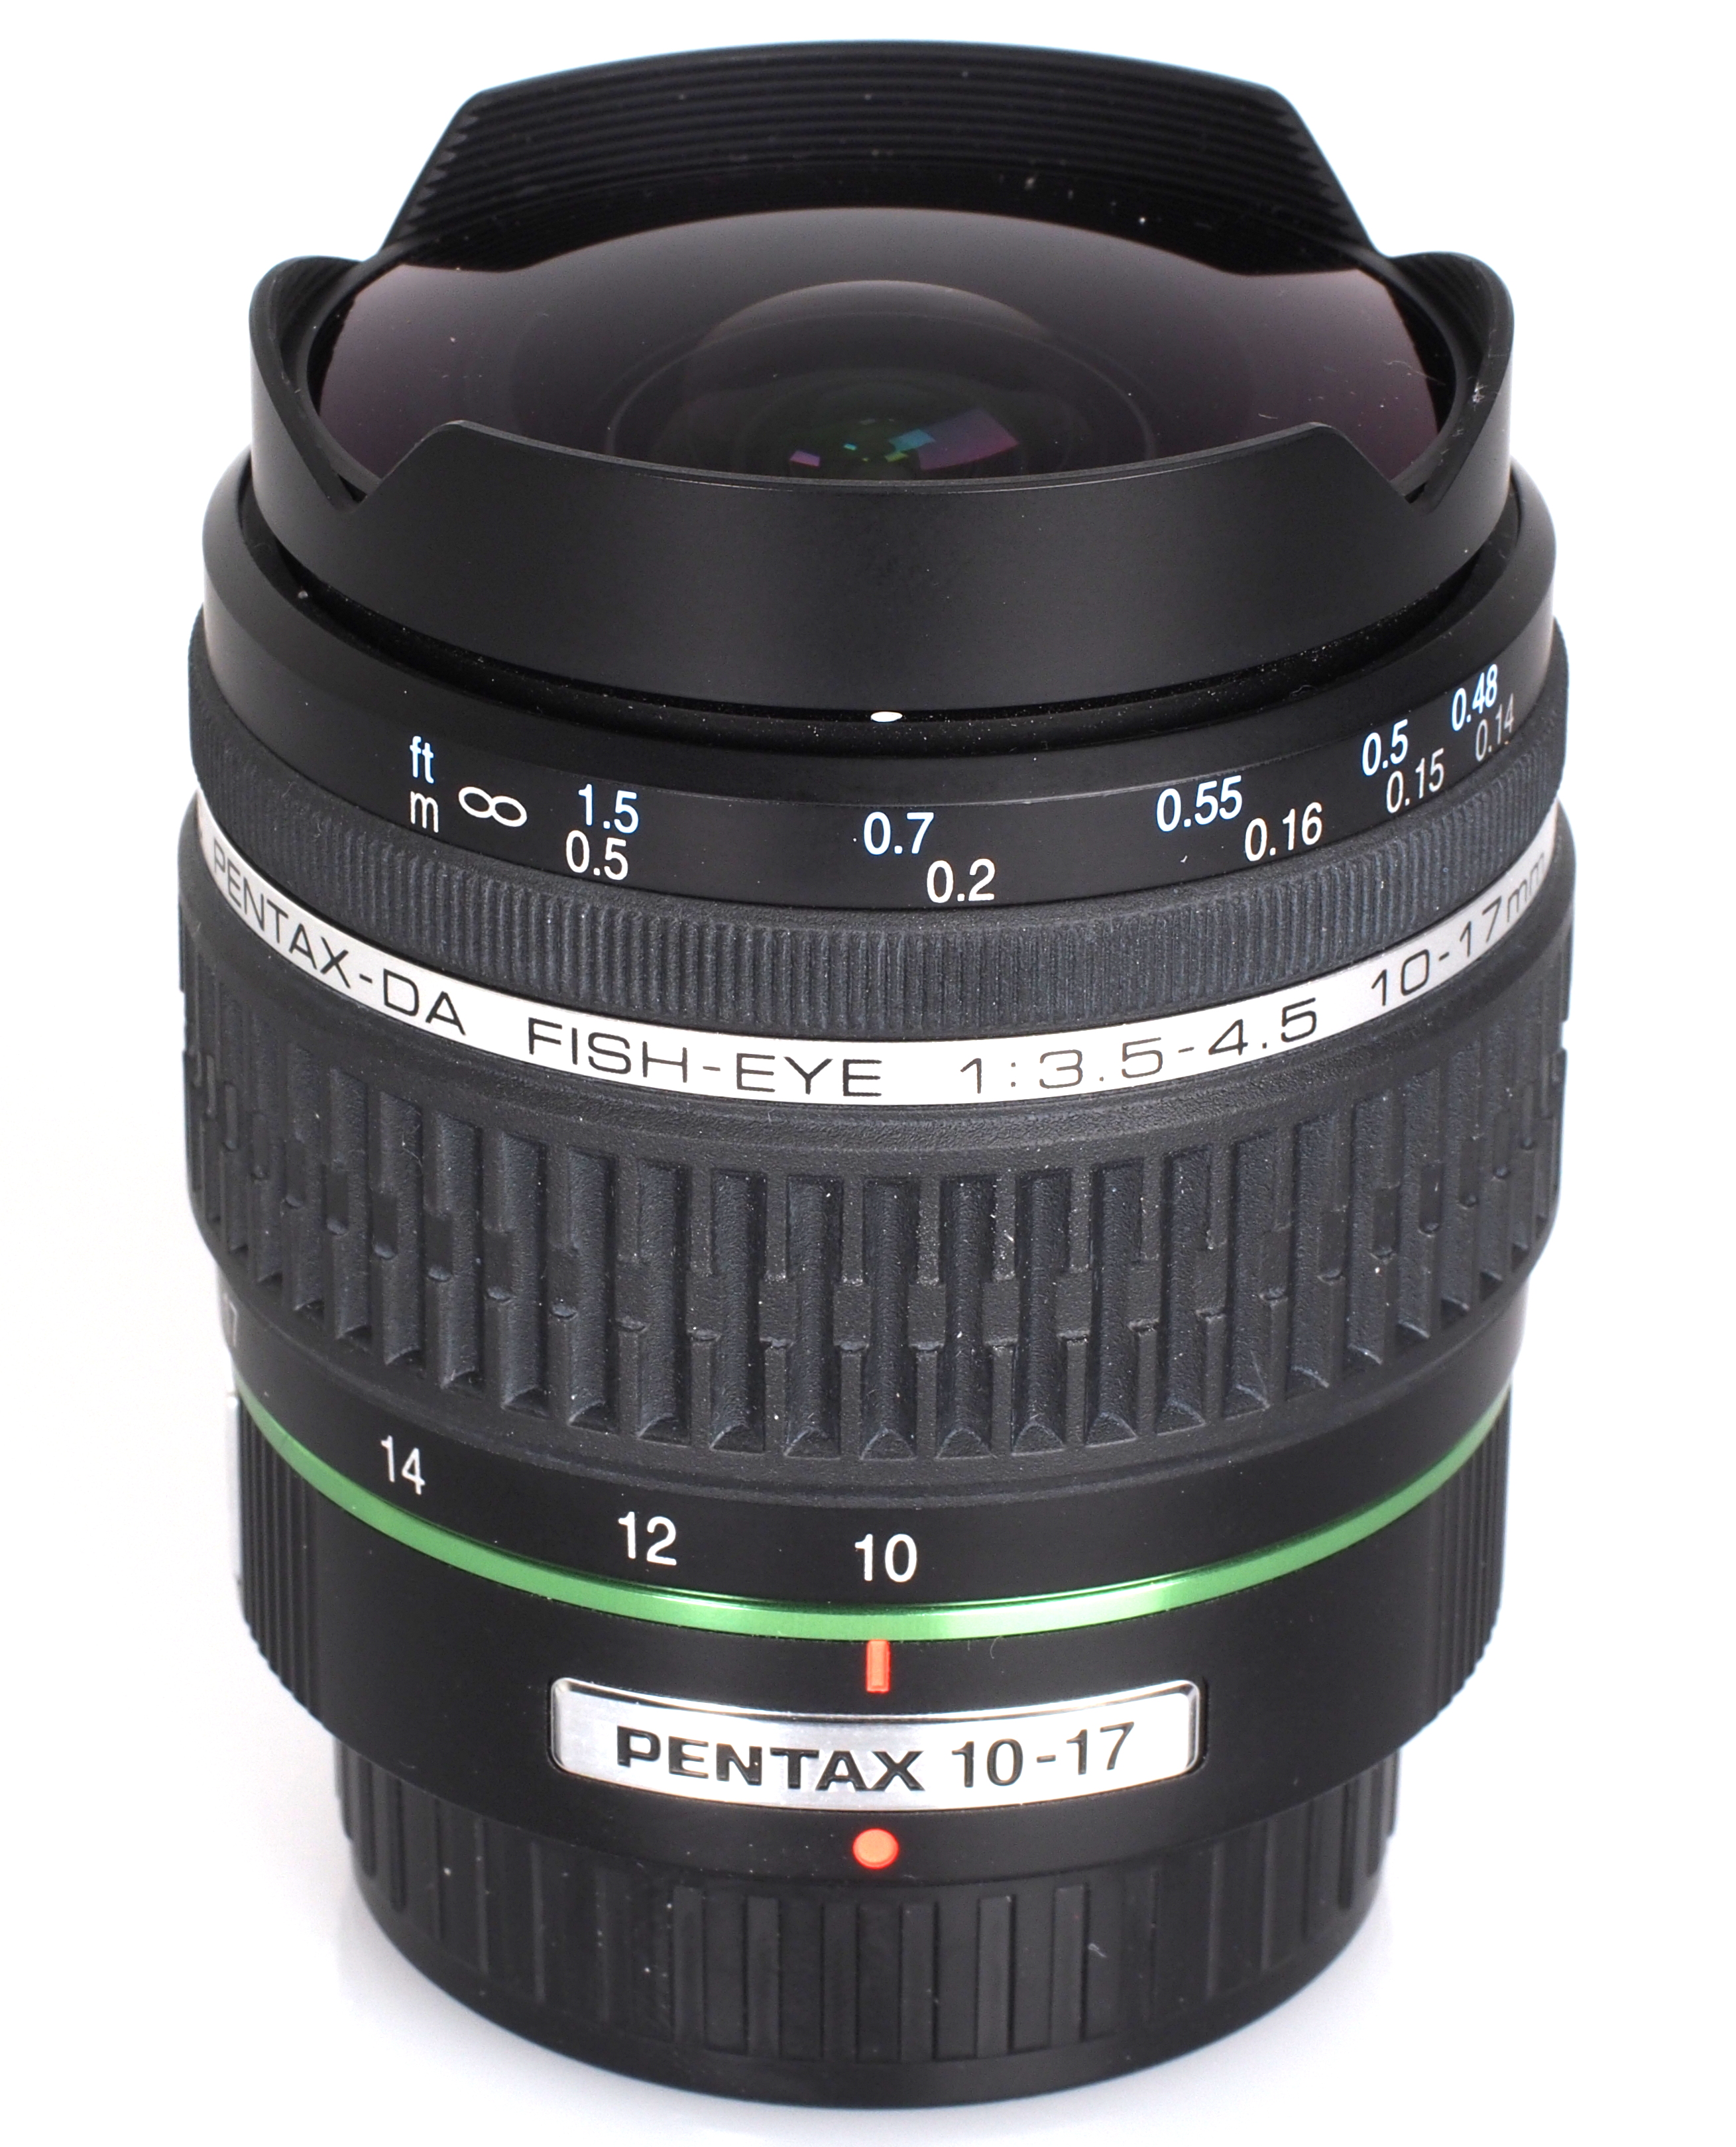 Pentax SMC P-DA Fish-Eye 10-17mm f/3.5-4.5 ED Lens Review